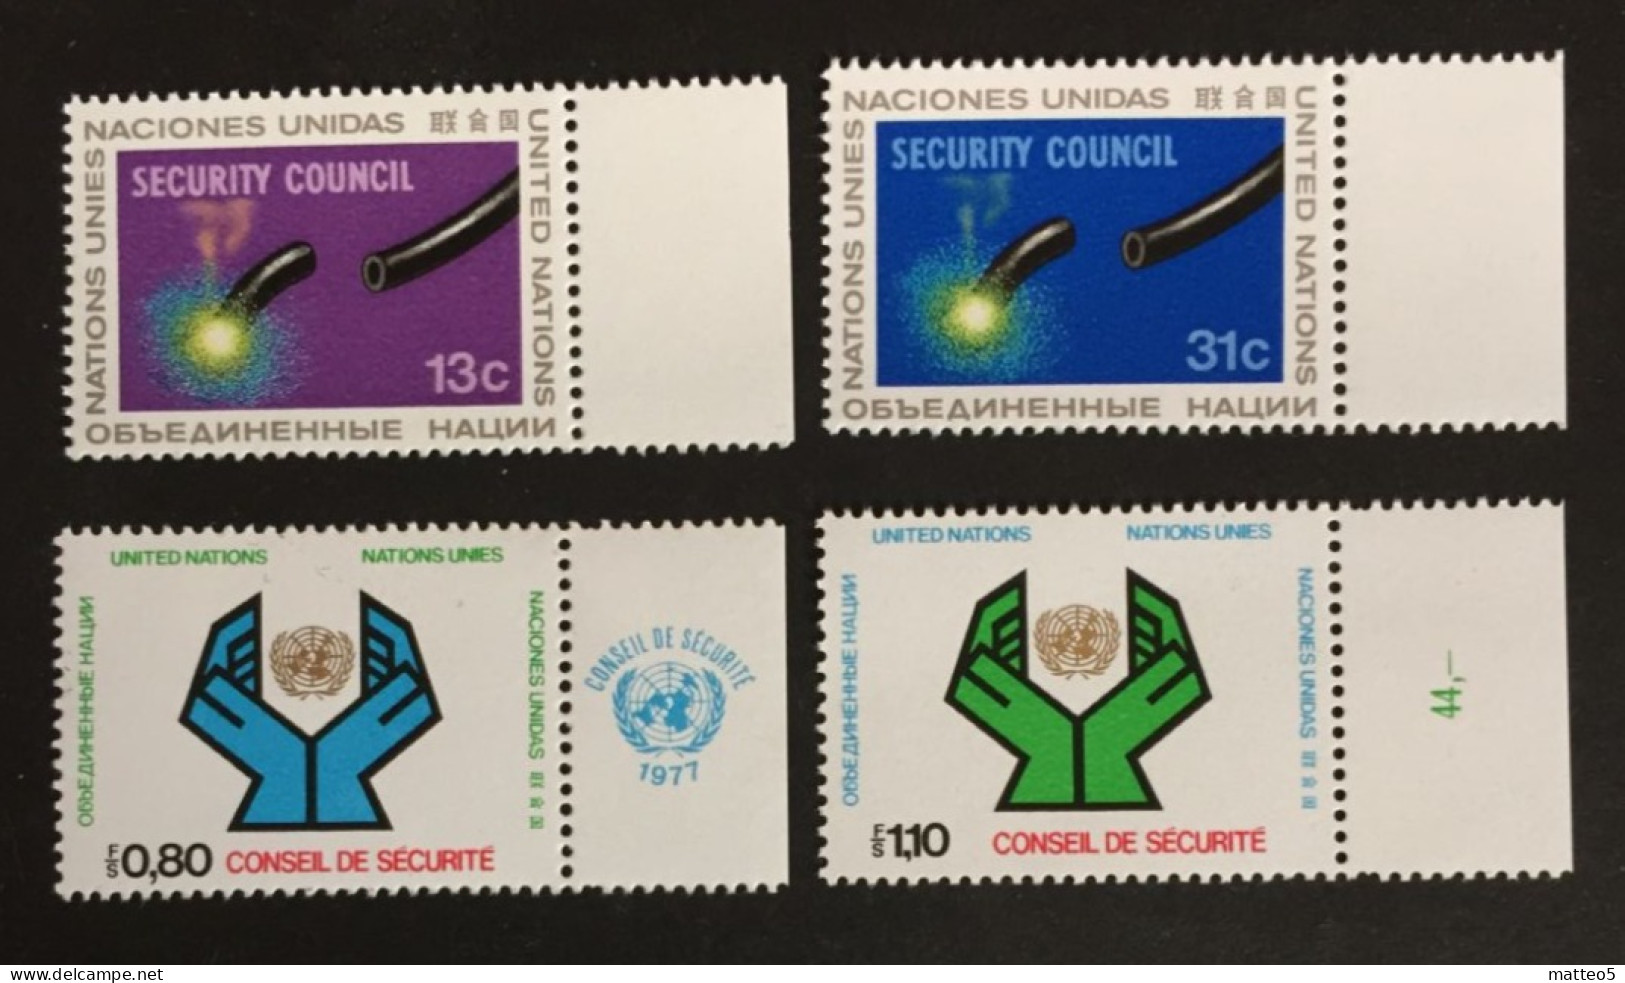 1977 - United Nations UNO UN - Security Council - 4 Stamps Unused - Ongebruikt